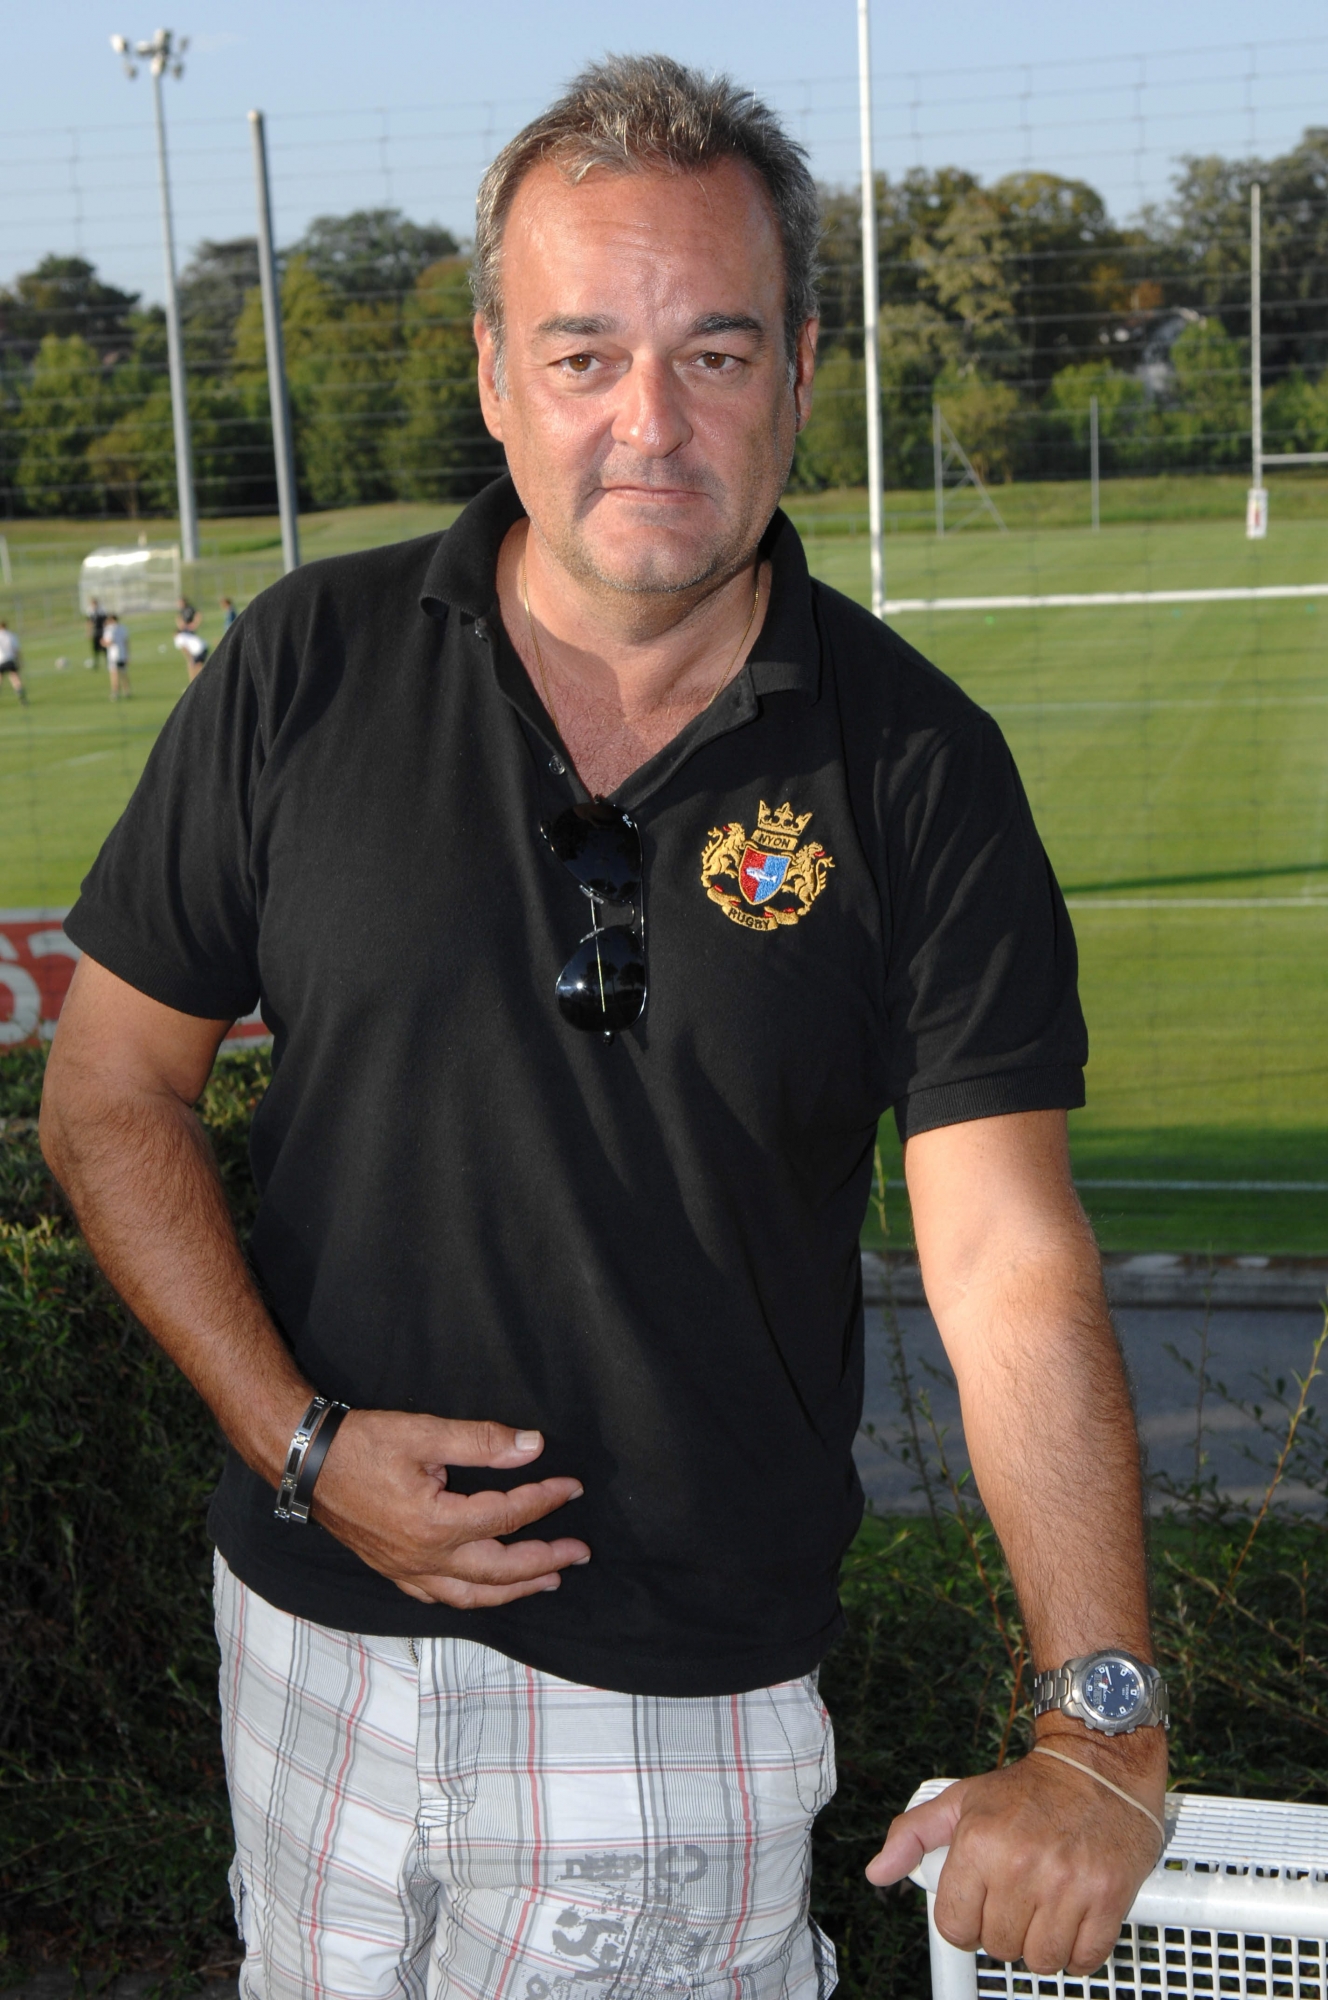 22.08.2011. Nyon. Colovray. Jean-Pierre Petmann. President du Rugby. Photo Audrey Piguet